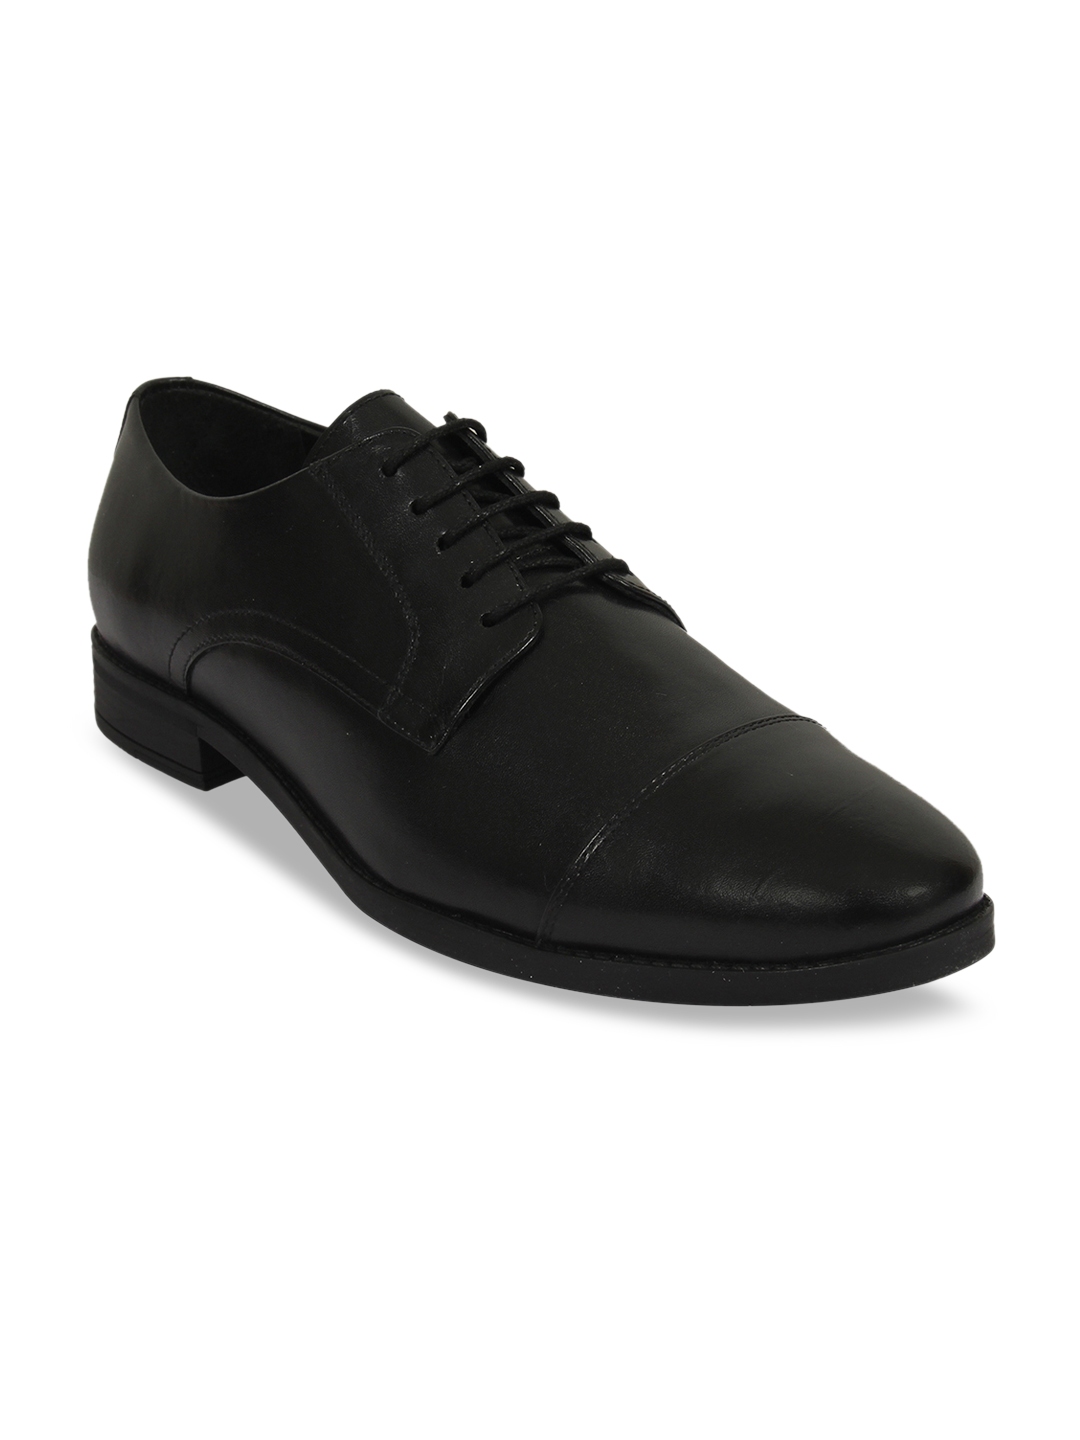 Buy Aditi Wasan Men Genuine Leather Black Formal Derbys - Formal Shoes ...